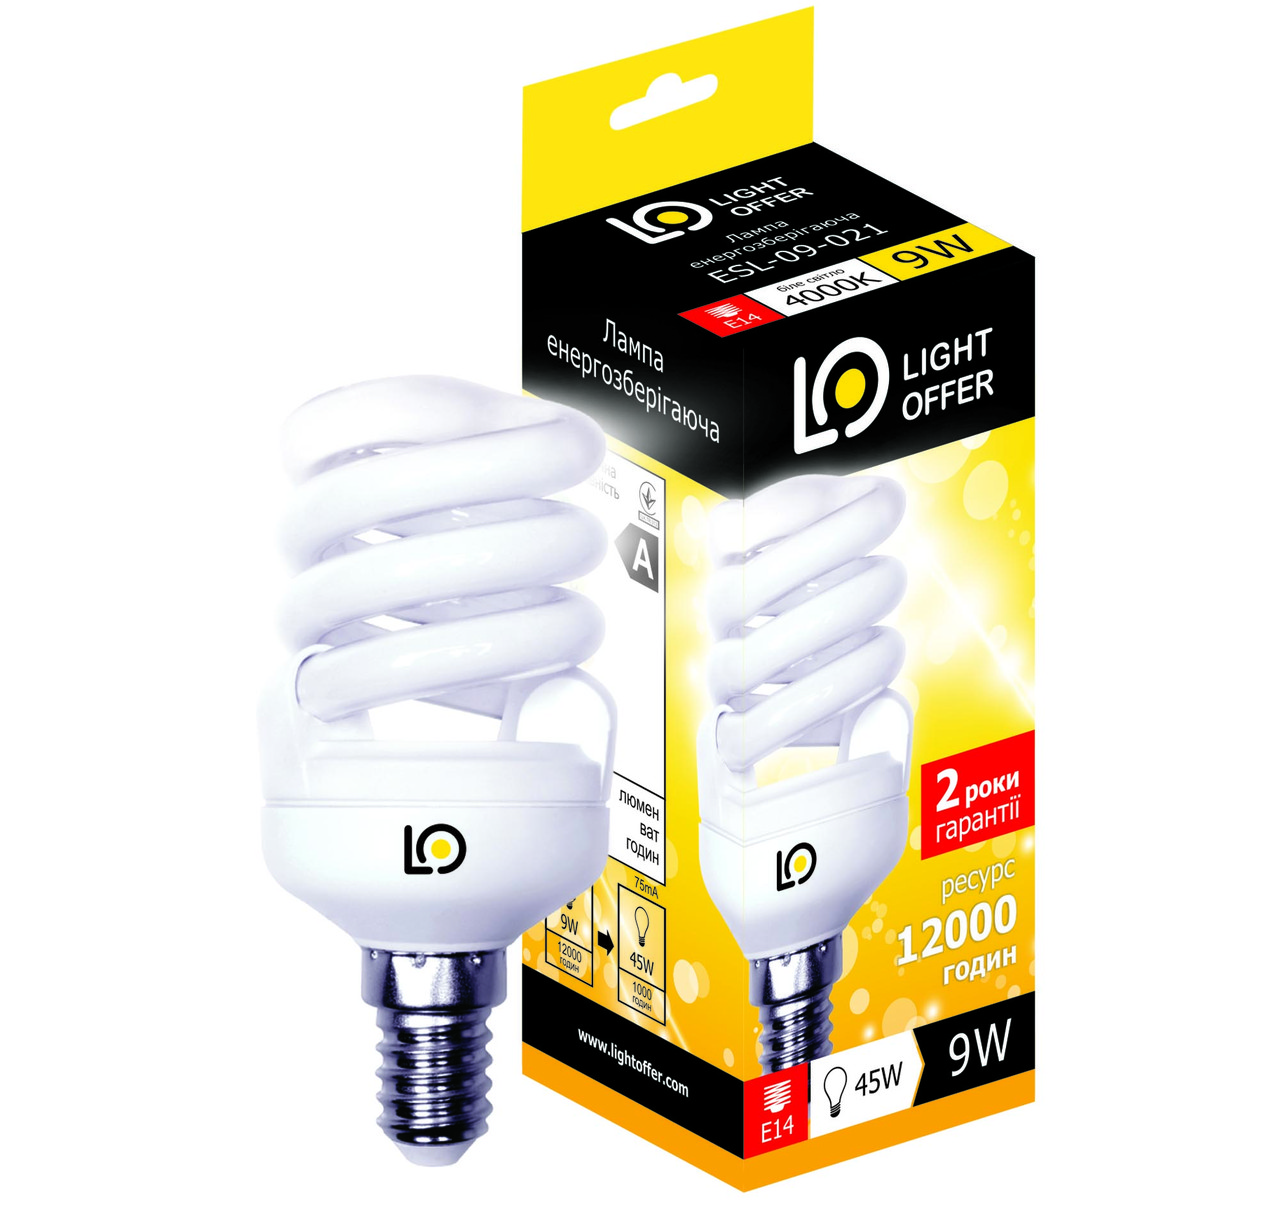 Енергоощадна лампа Light Offer Т2 Spiral ЕSL 9 W E14 4000 К 470 Lm (ЕSL — 09 — 021)